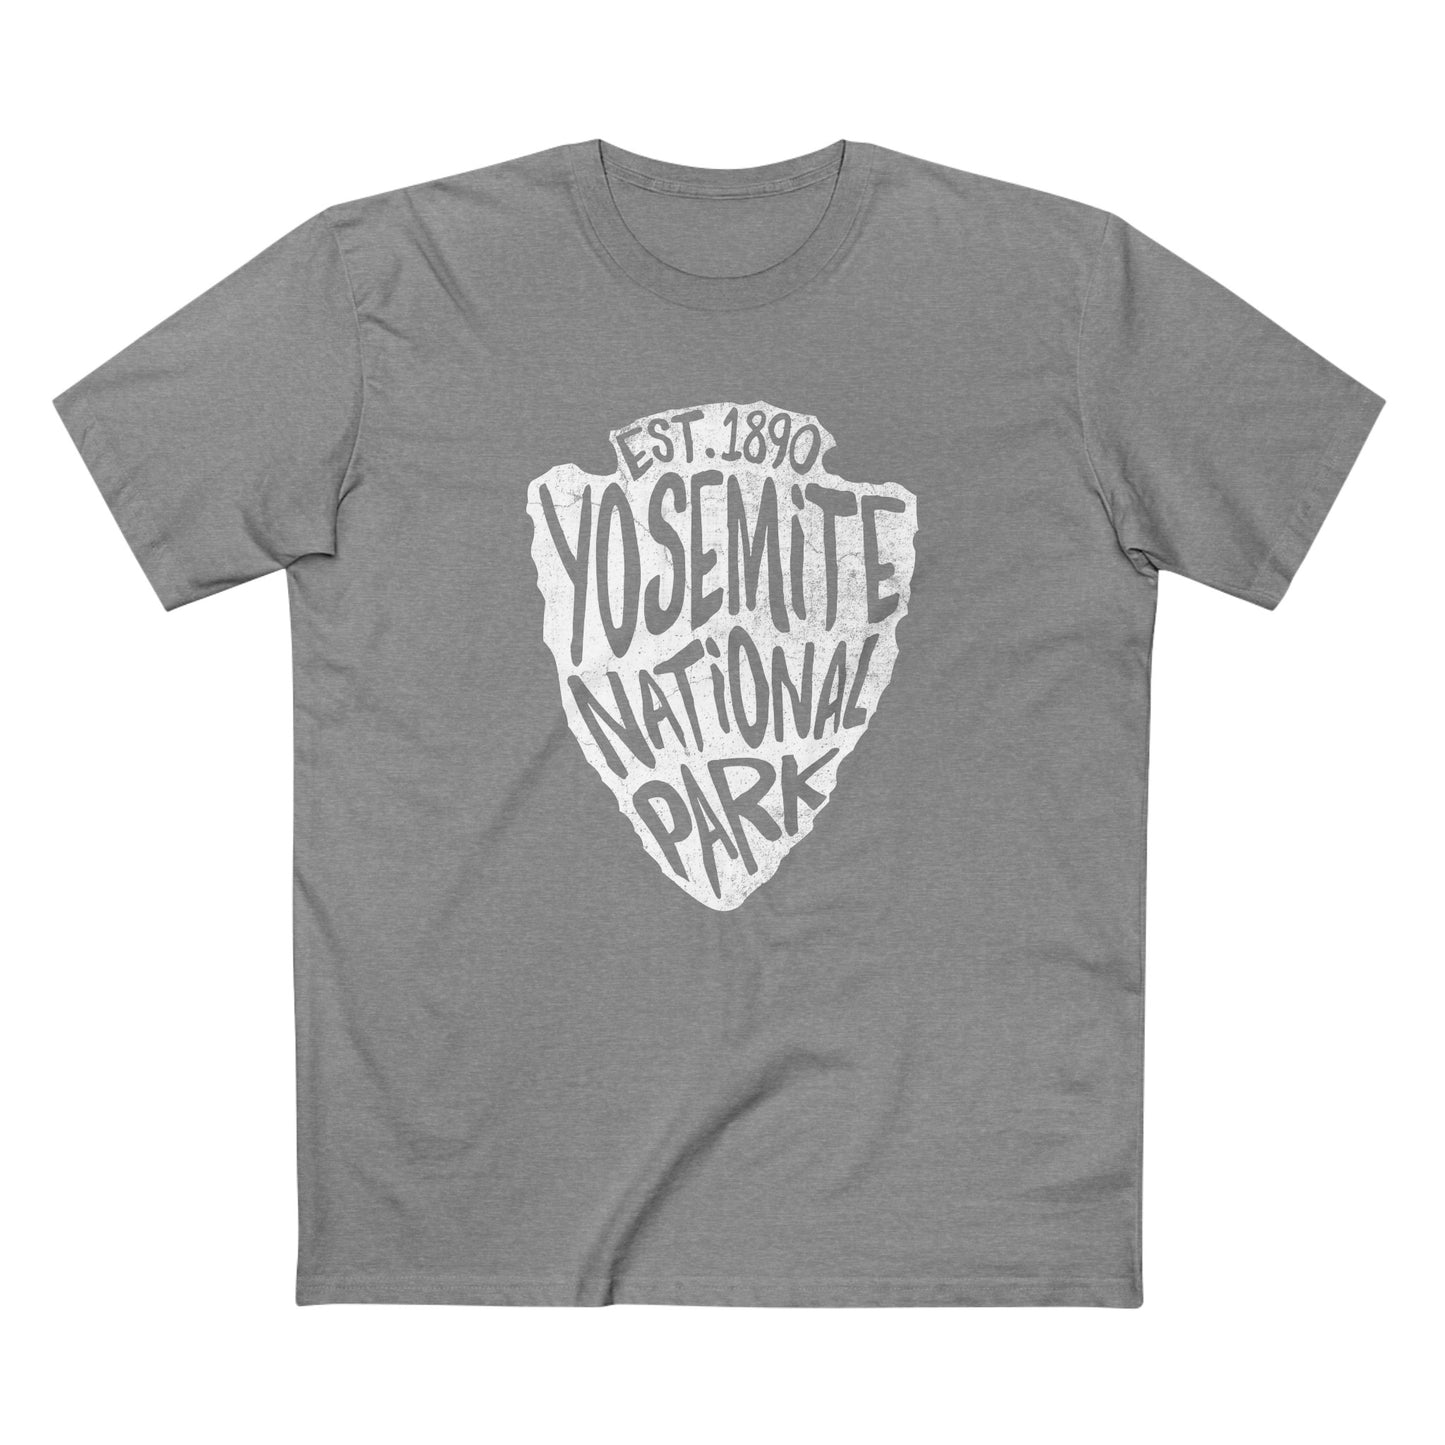 Yosemite National Park T-Shirt - Arrowhead Design